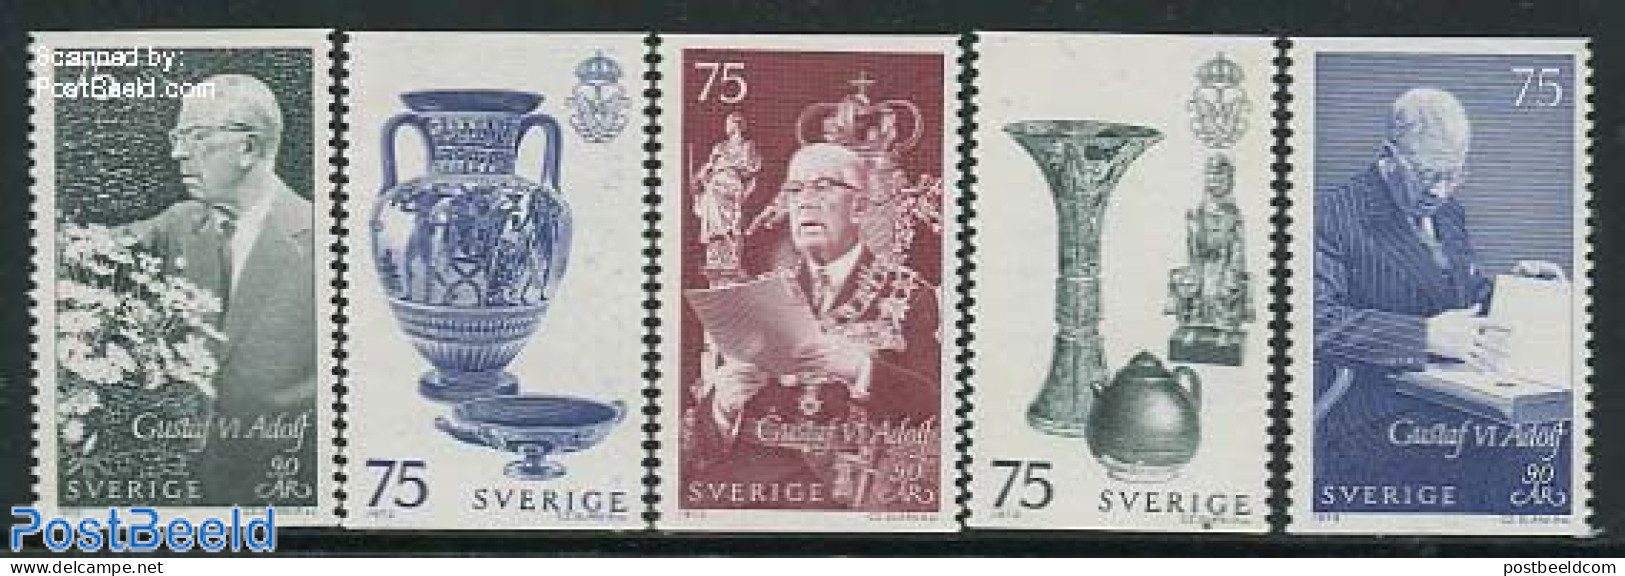 Sweden 1972 King Gustav 90th Anniversary 5v, Mint NH, History - Kings & Queens (Royalty) - Ongebruikt